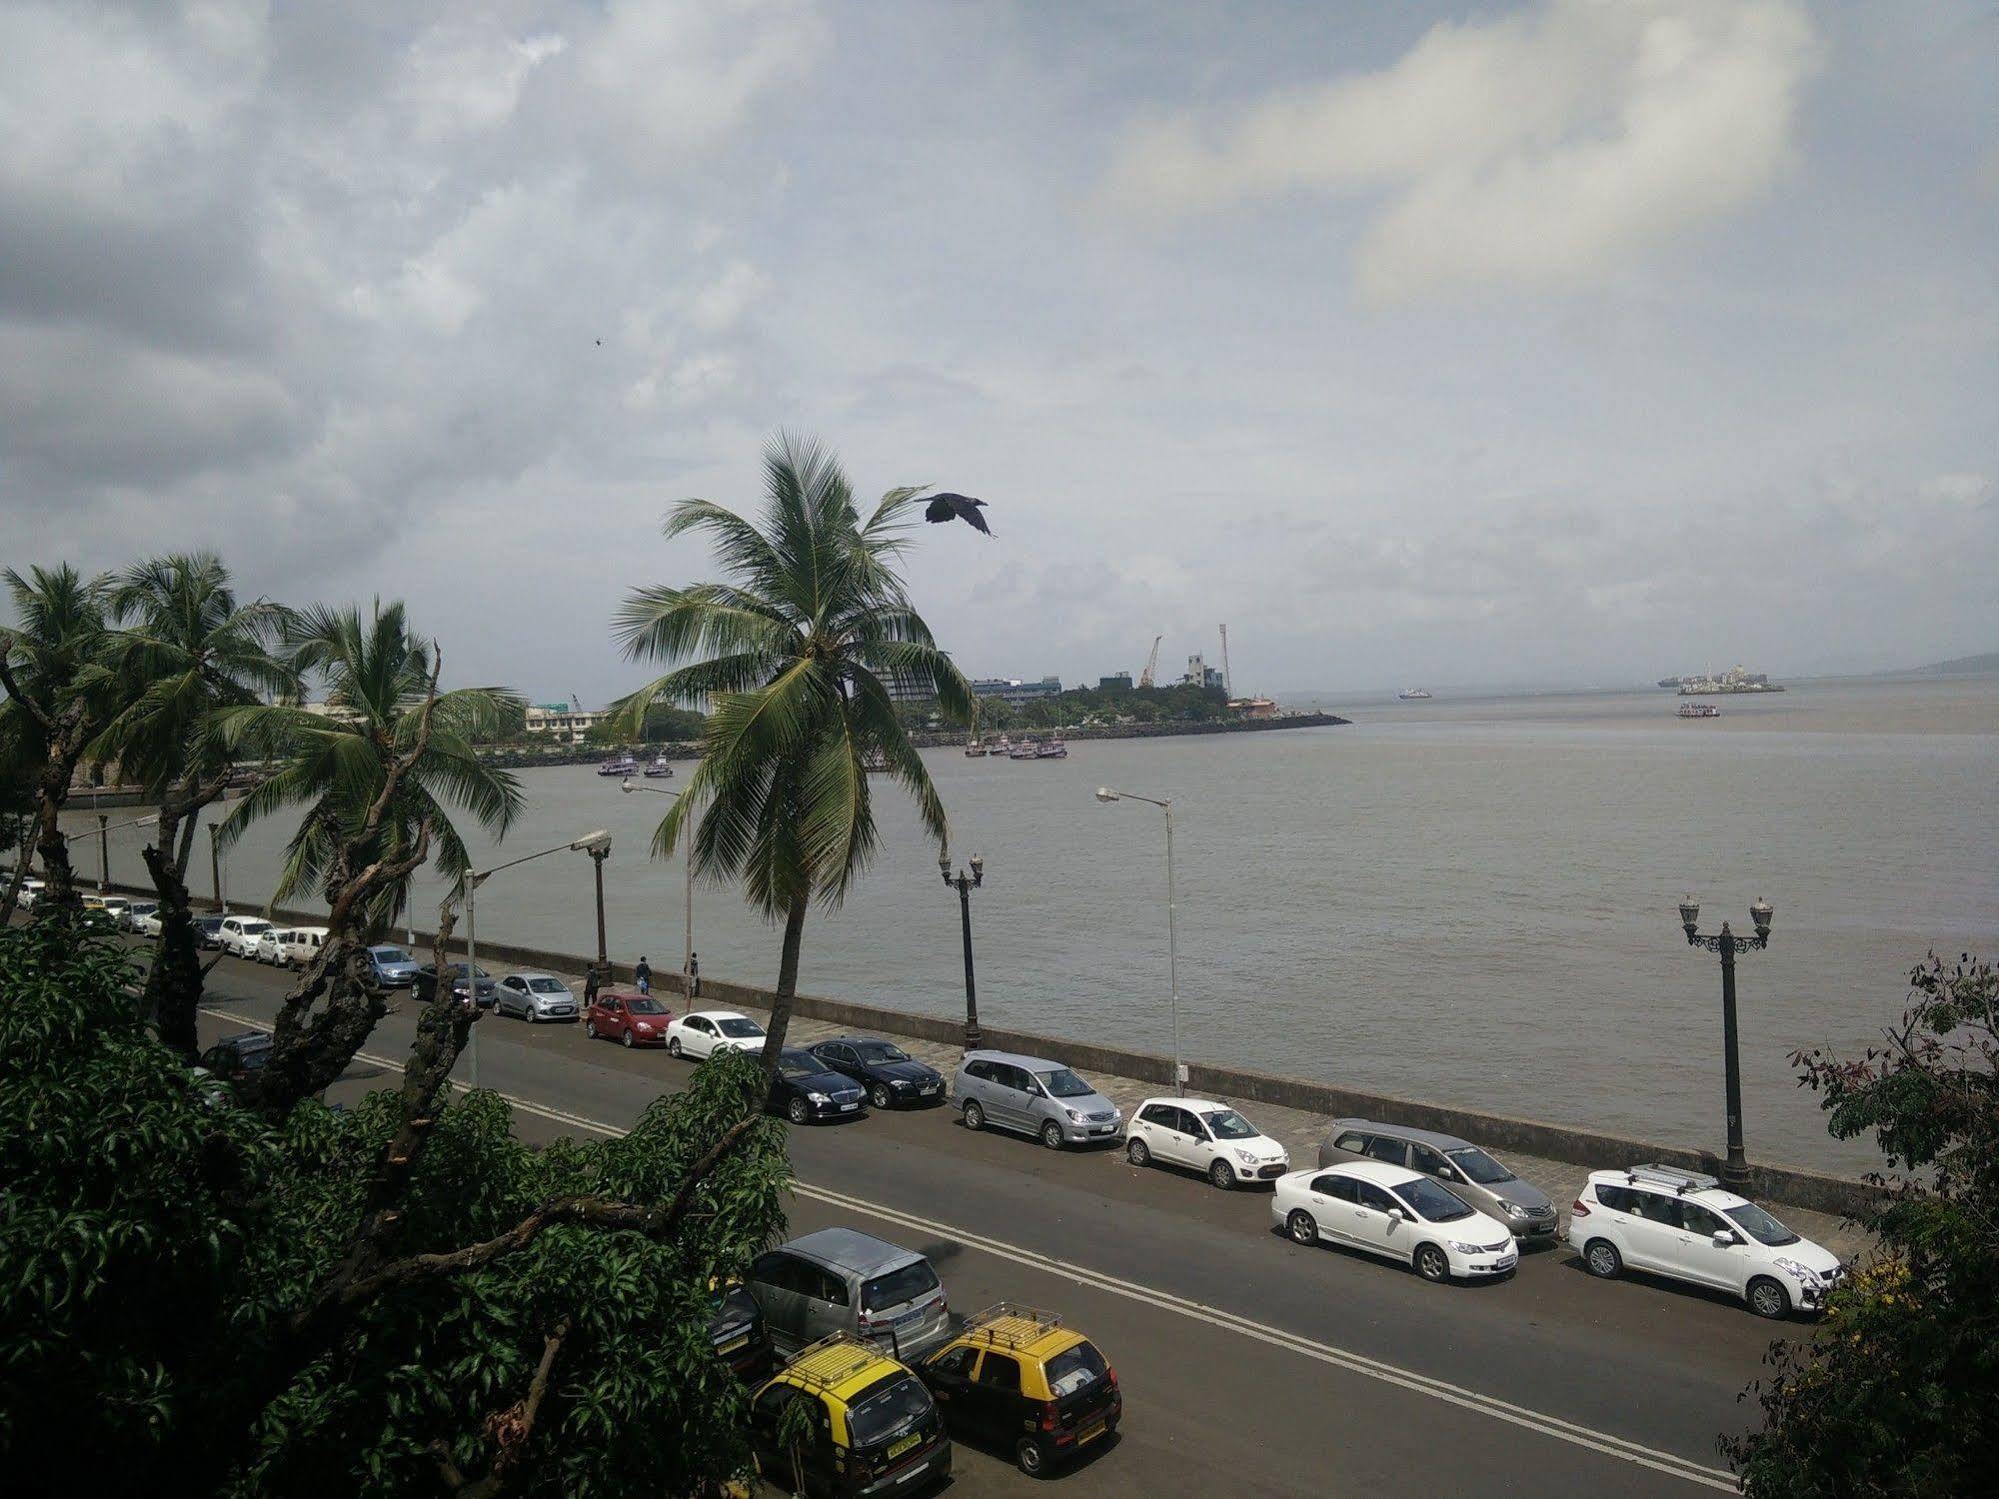 Strand Hotel, Colaba Mumbai Exterior photo